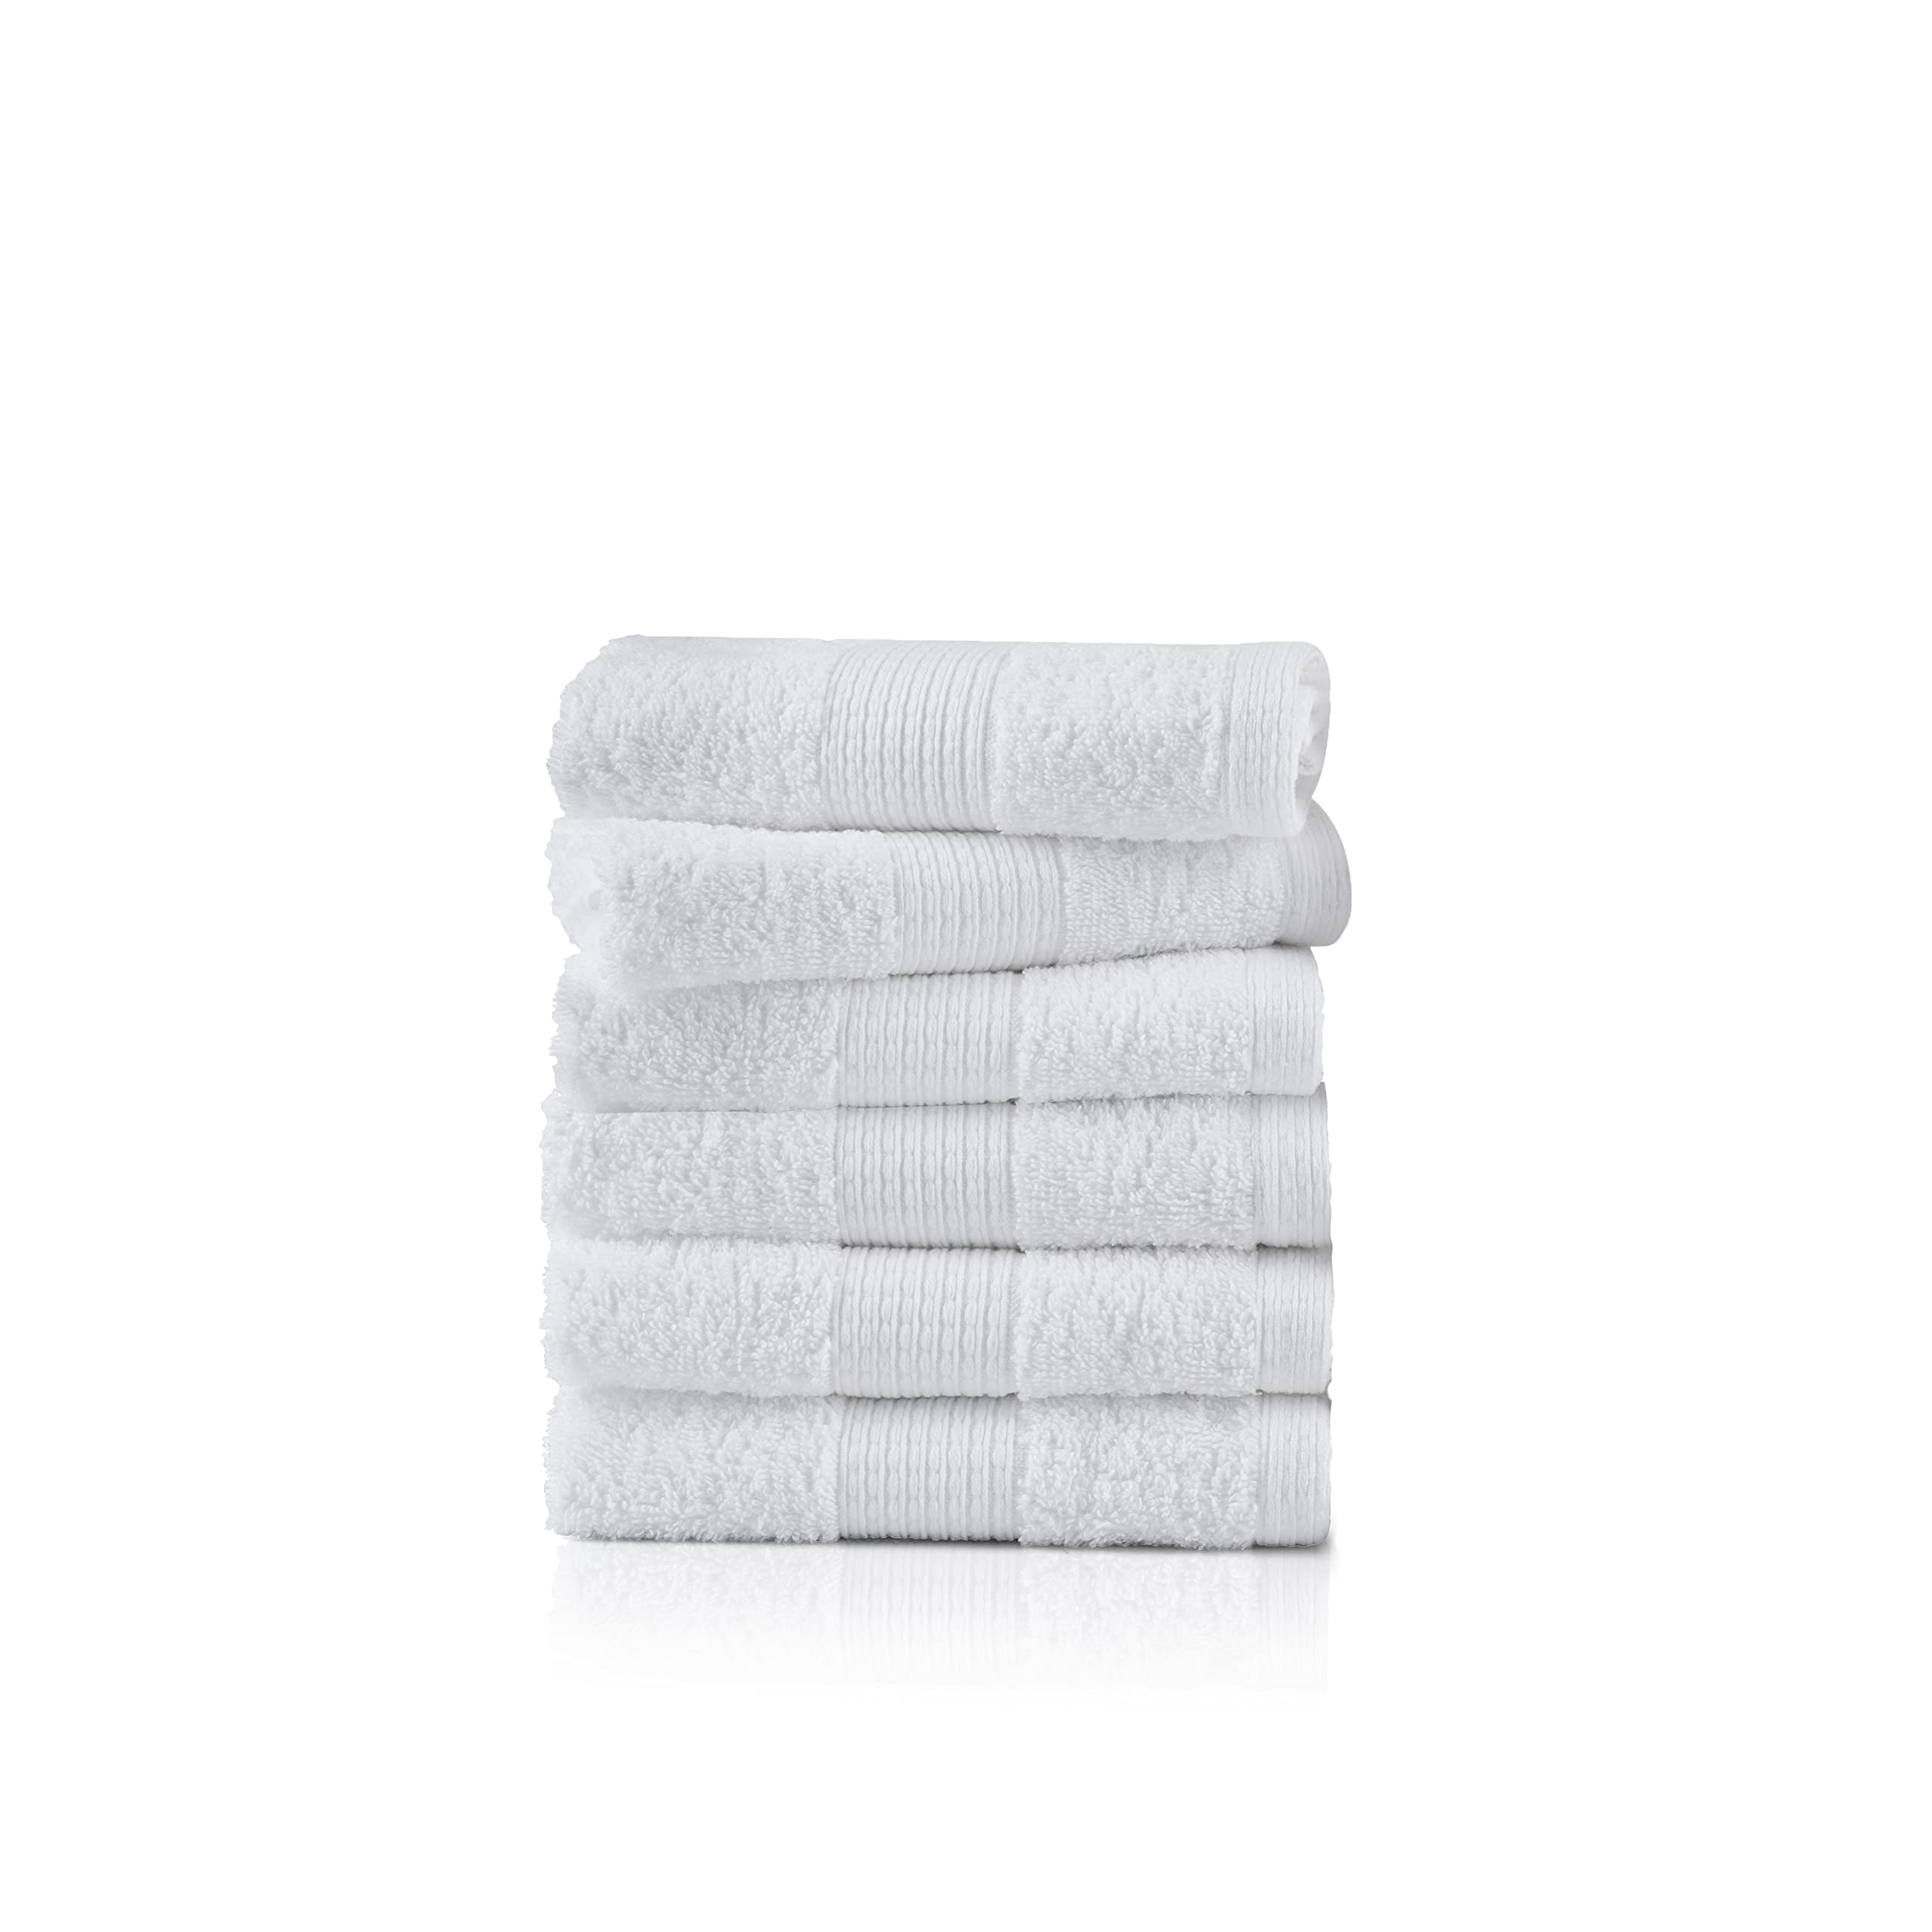 White Cotton Hotel Hand Towel